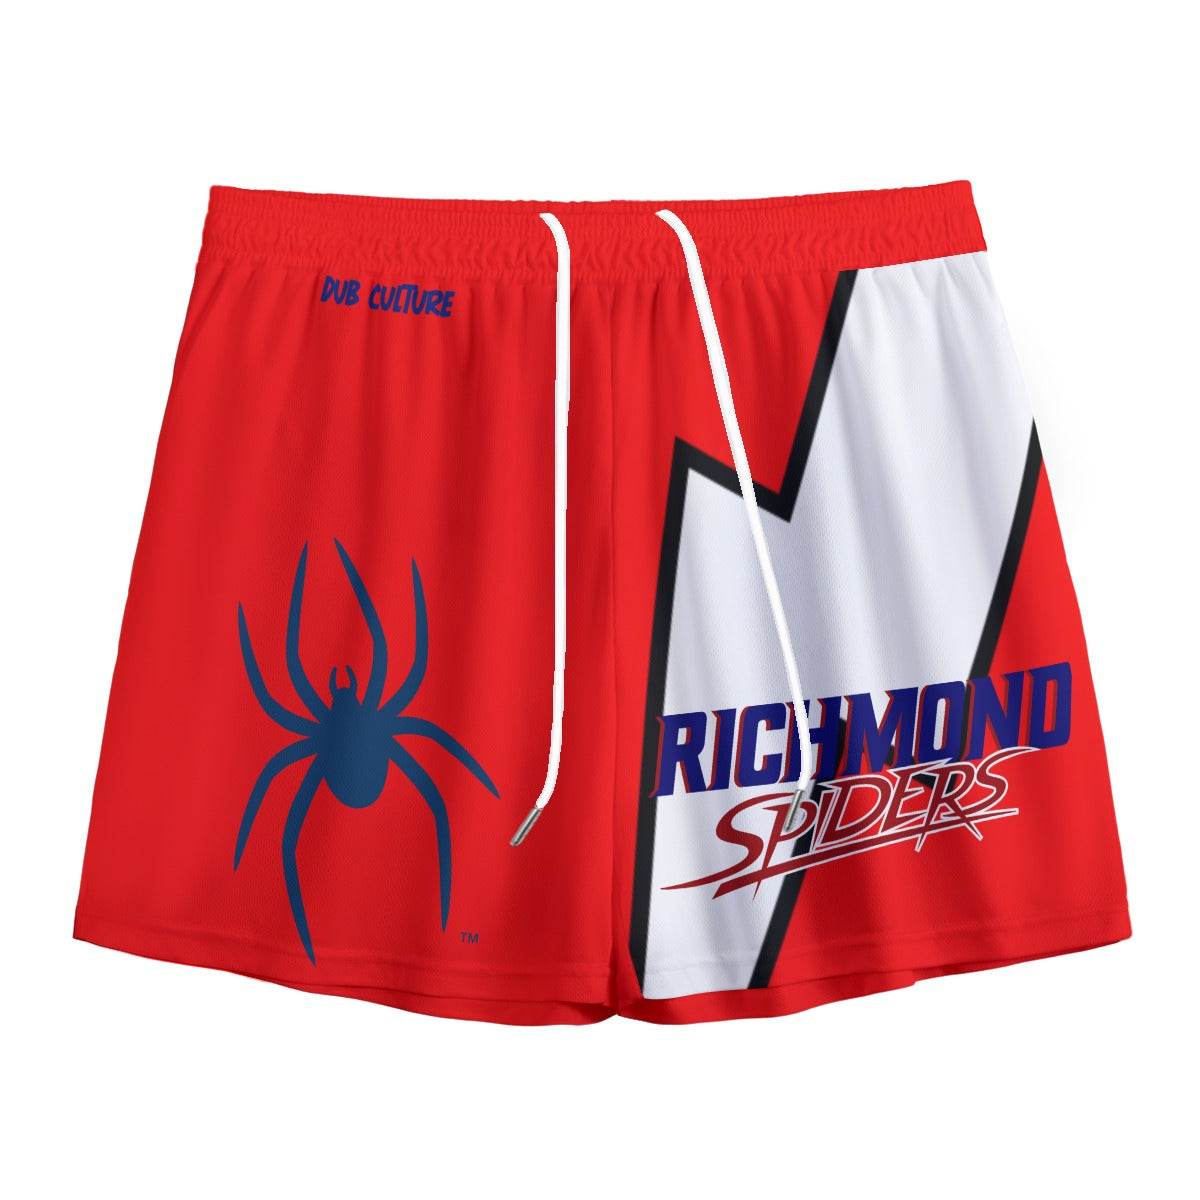 Richmond Mesh Shorts